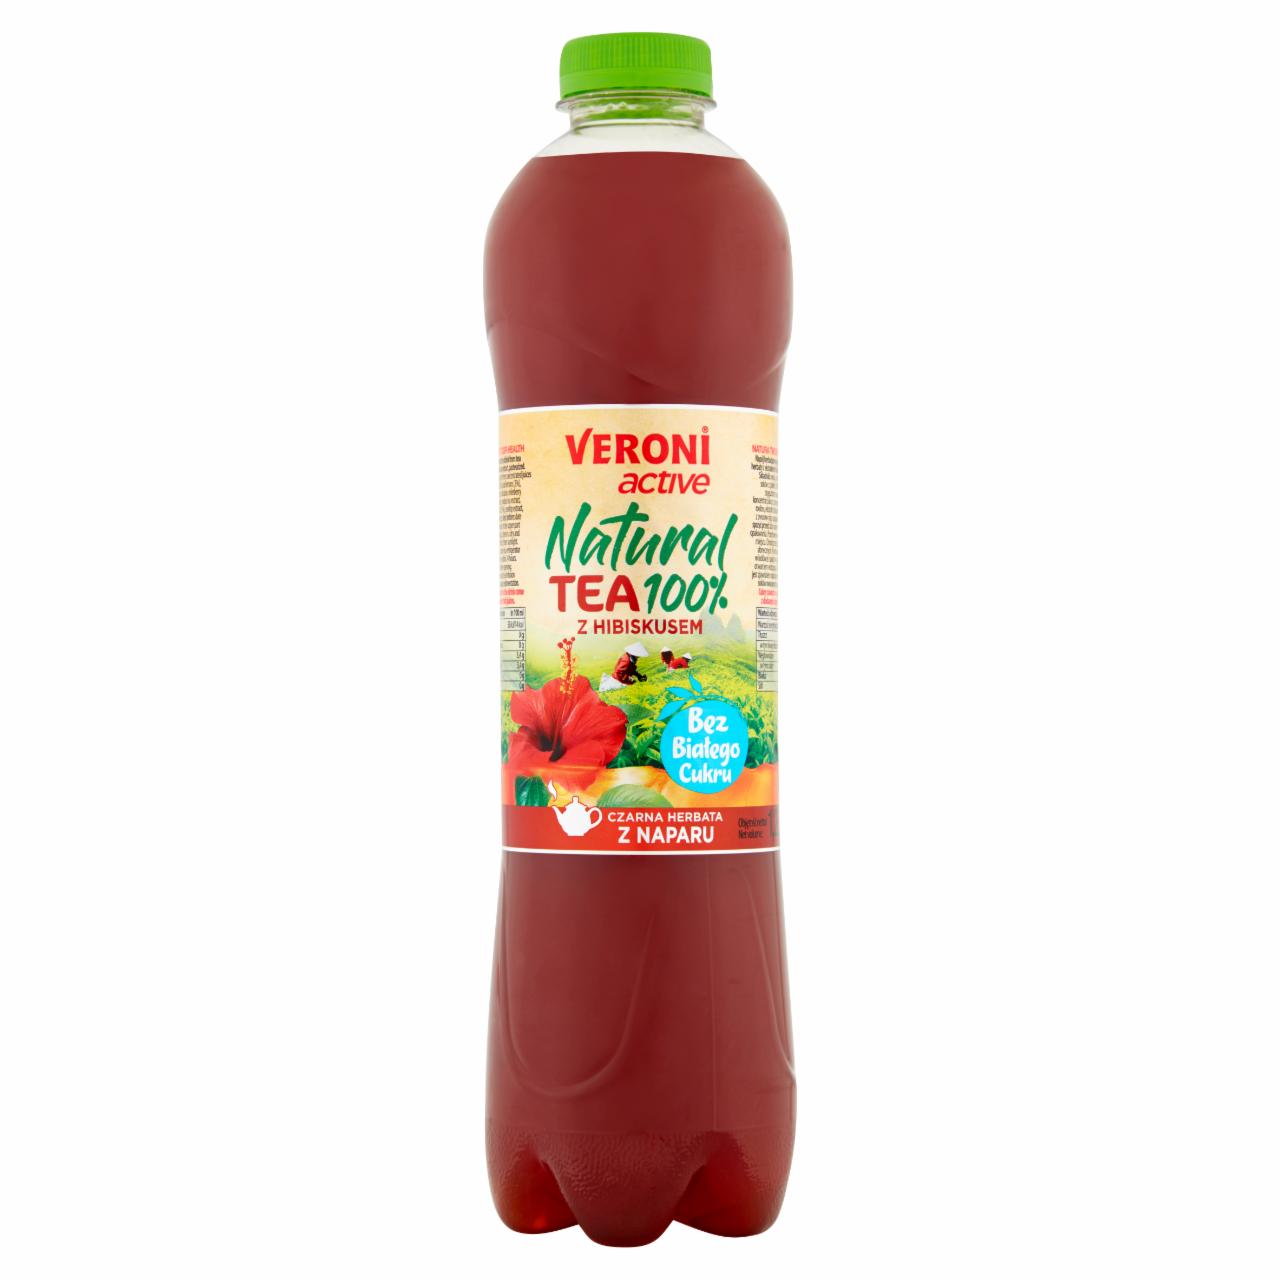 Zdjęcia - Veroni Active Natural Tea 100% Napój niegazowany czarna herbata z naparu z hibiskusem 1,25 l